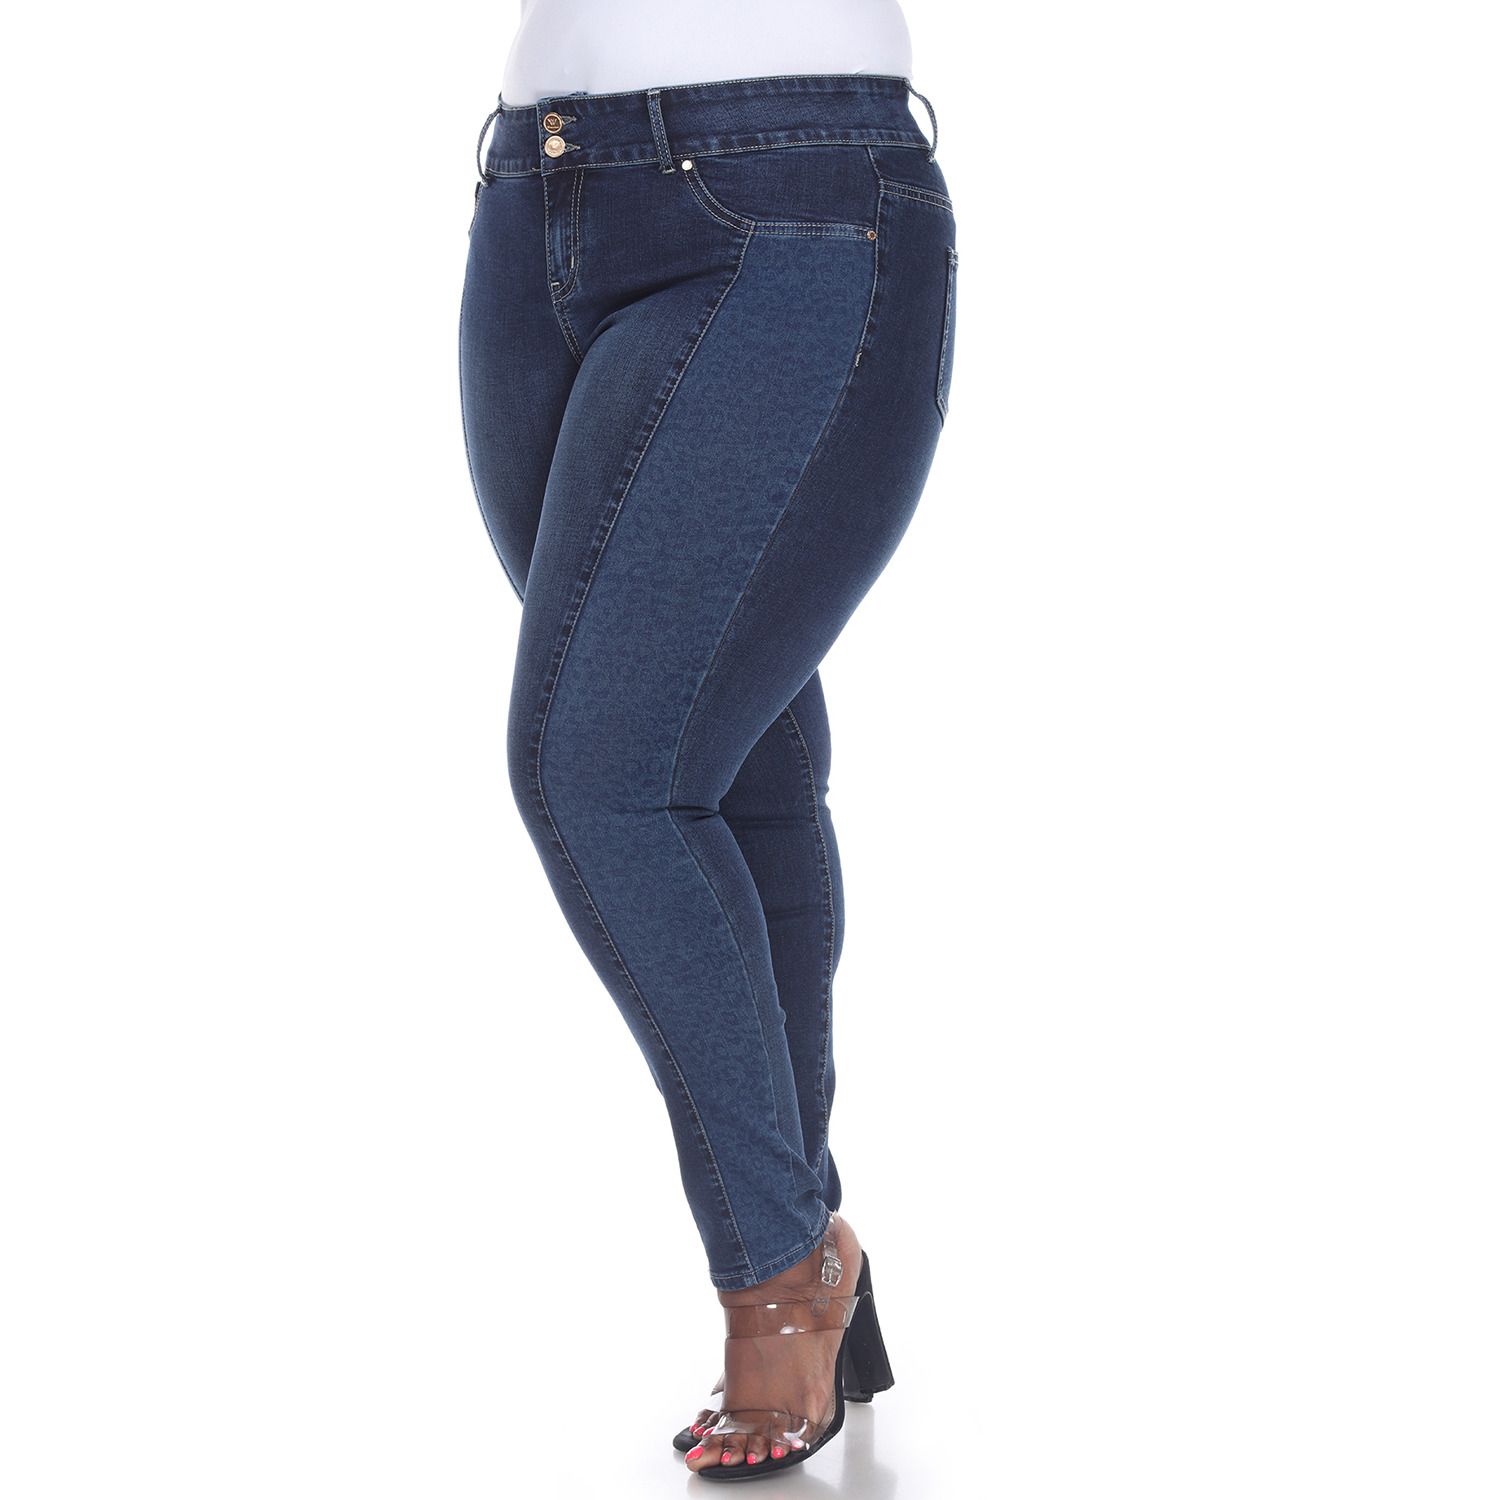 women's plus size white skinny jeans